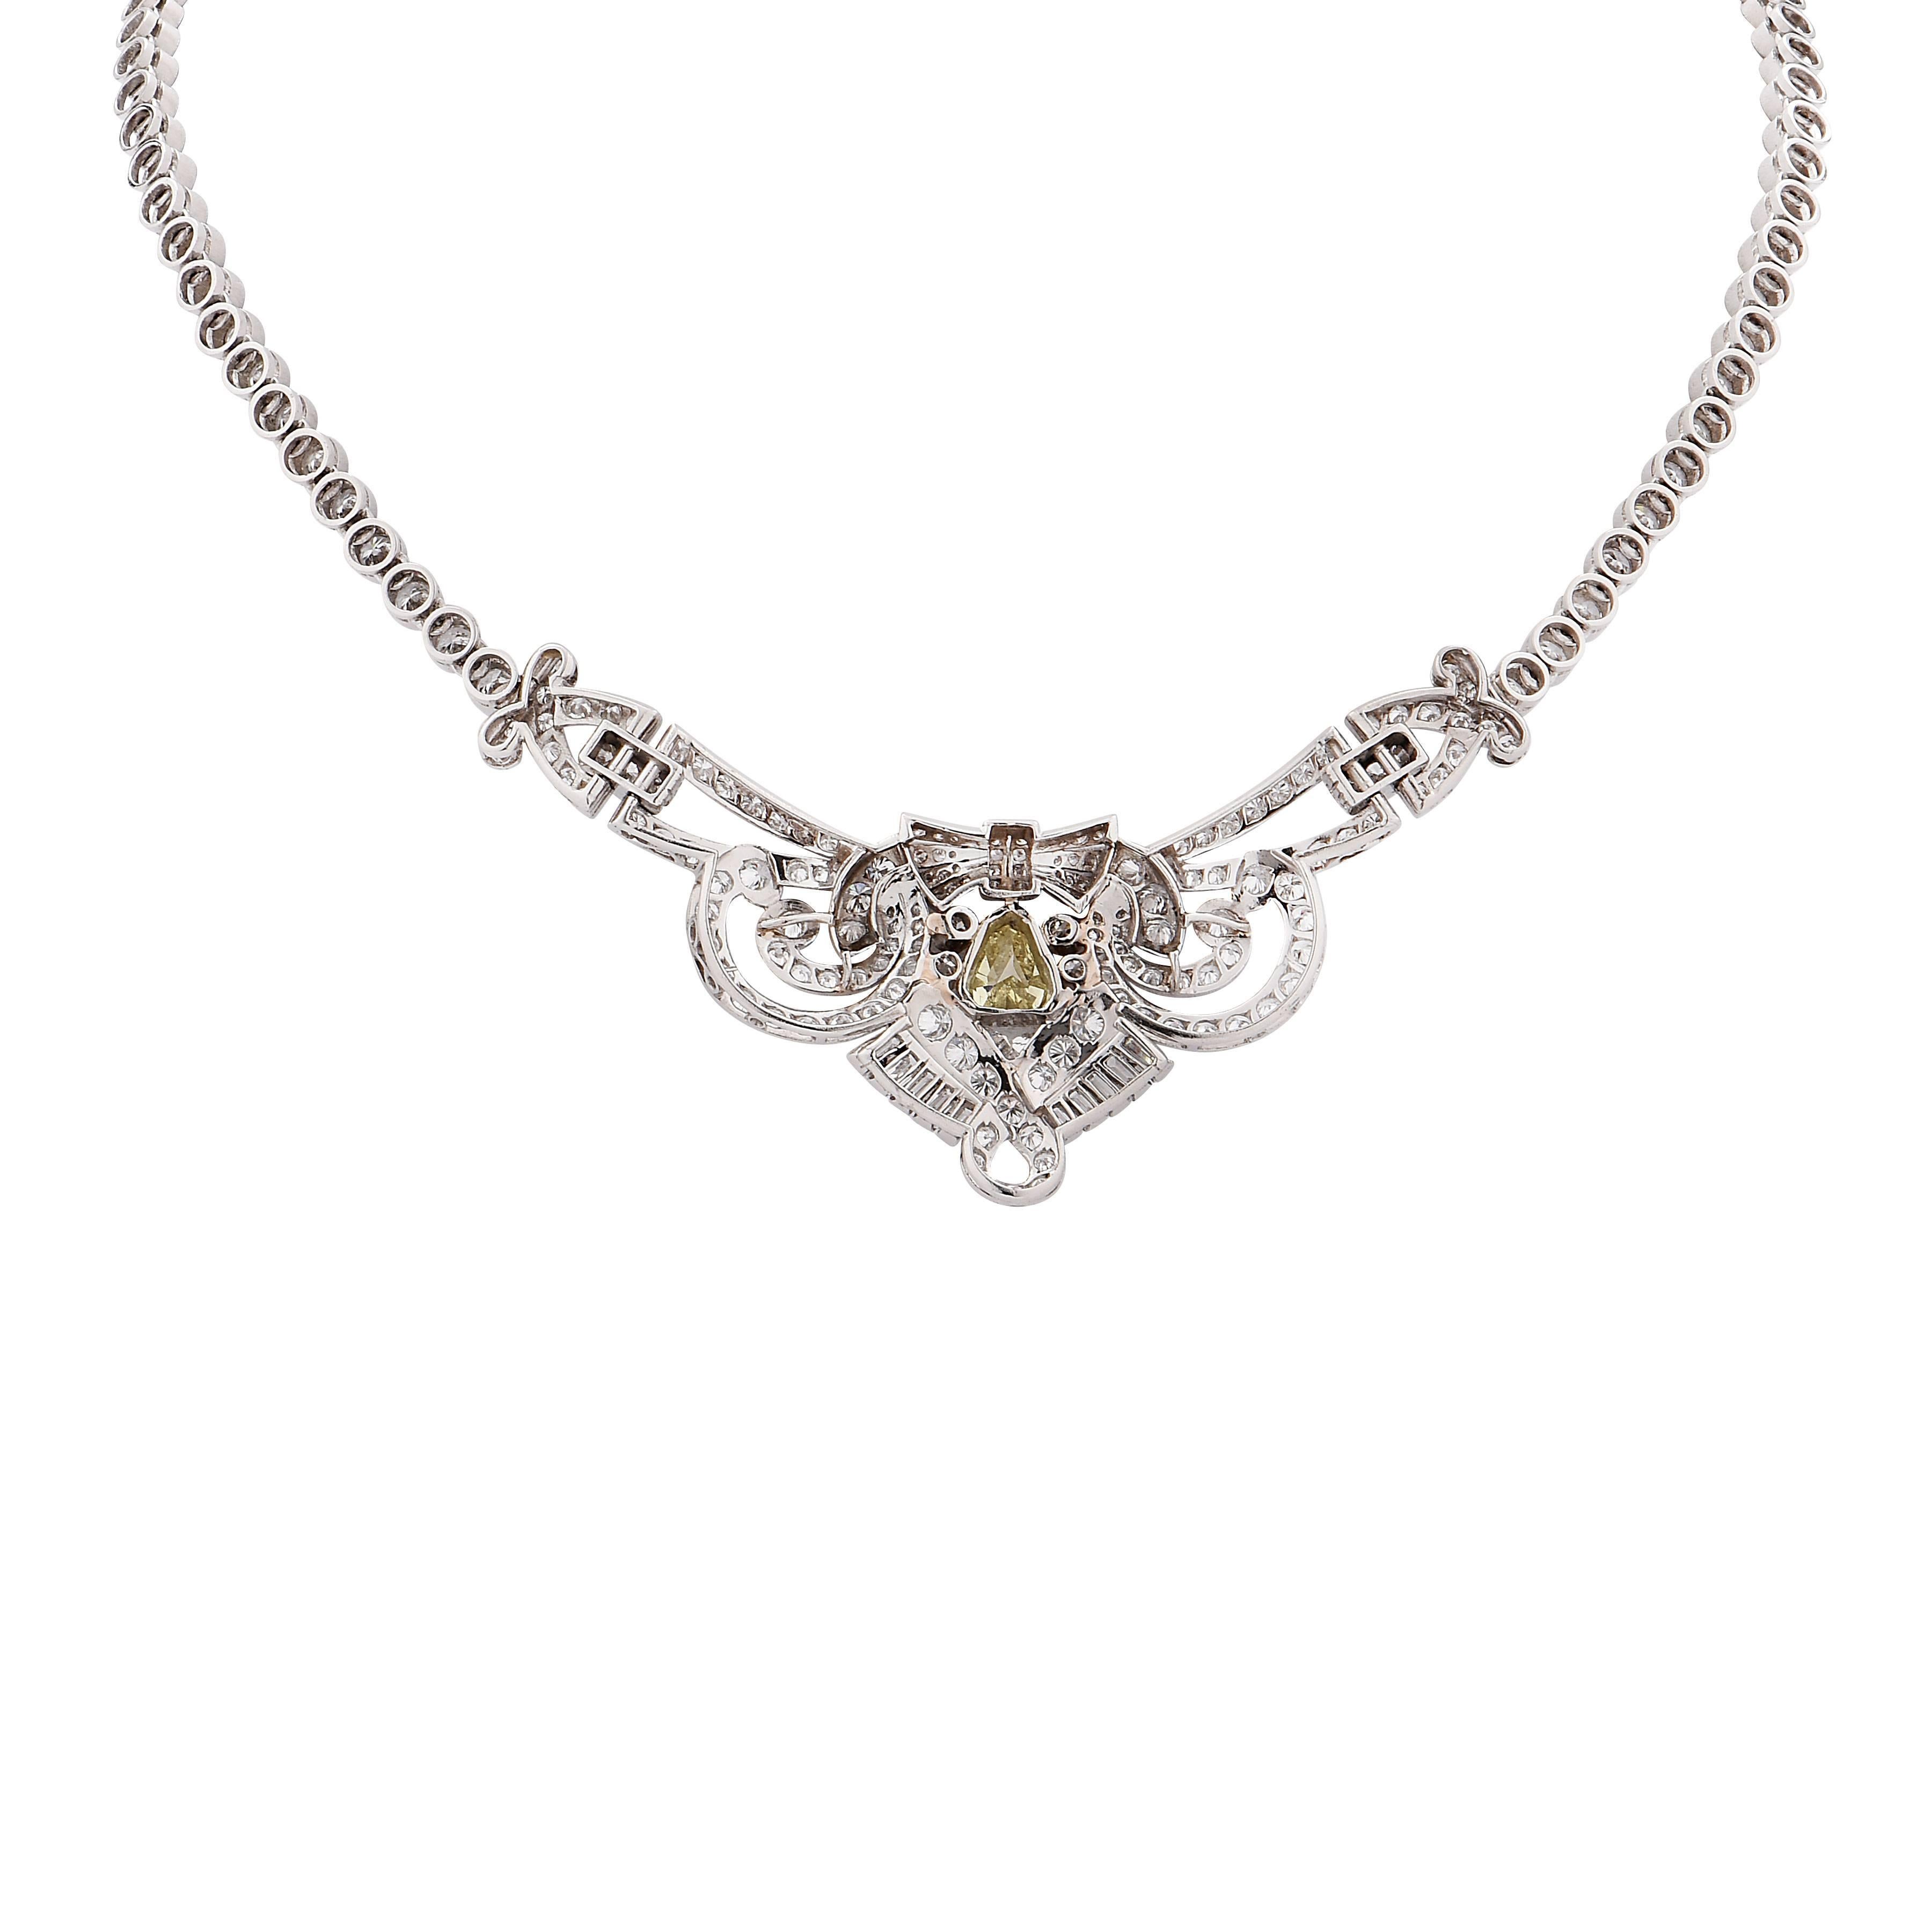 12 Carat Diamond Platinum Necklace In Excellent Condition For Sale In Bay Harbor Islands, FL